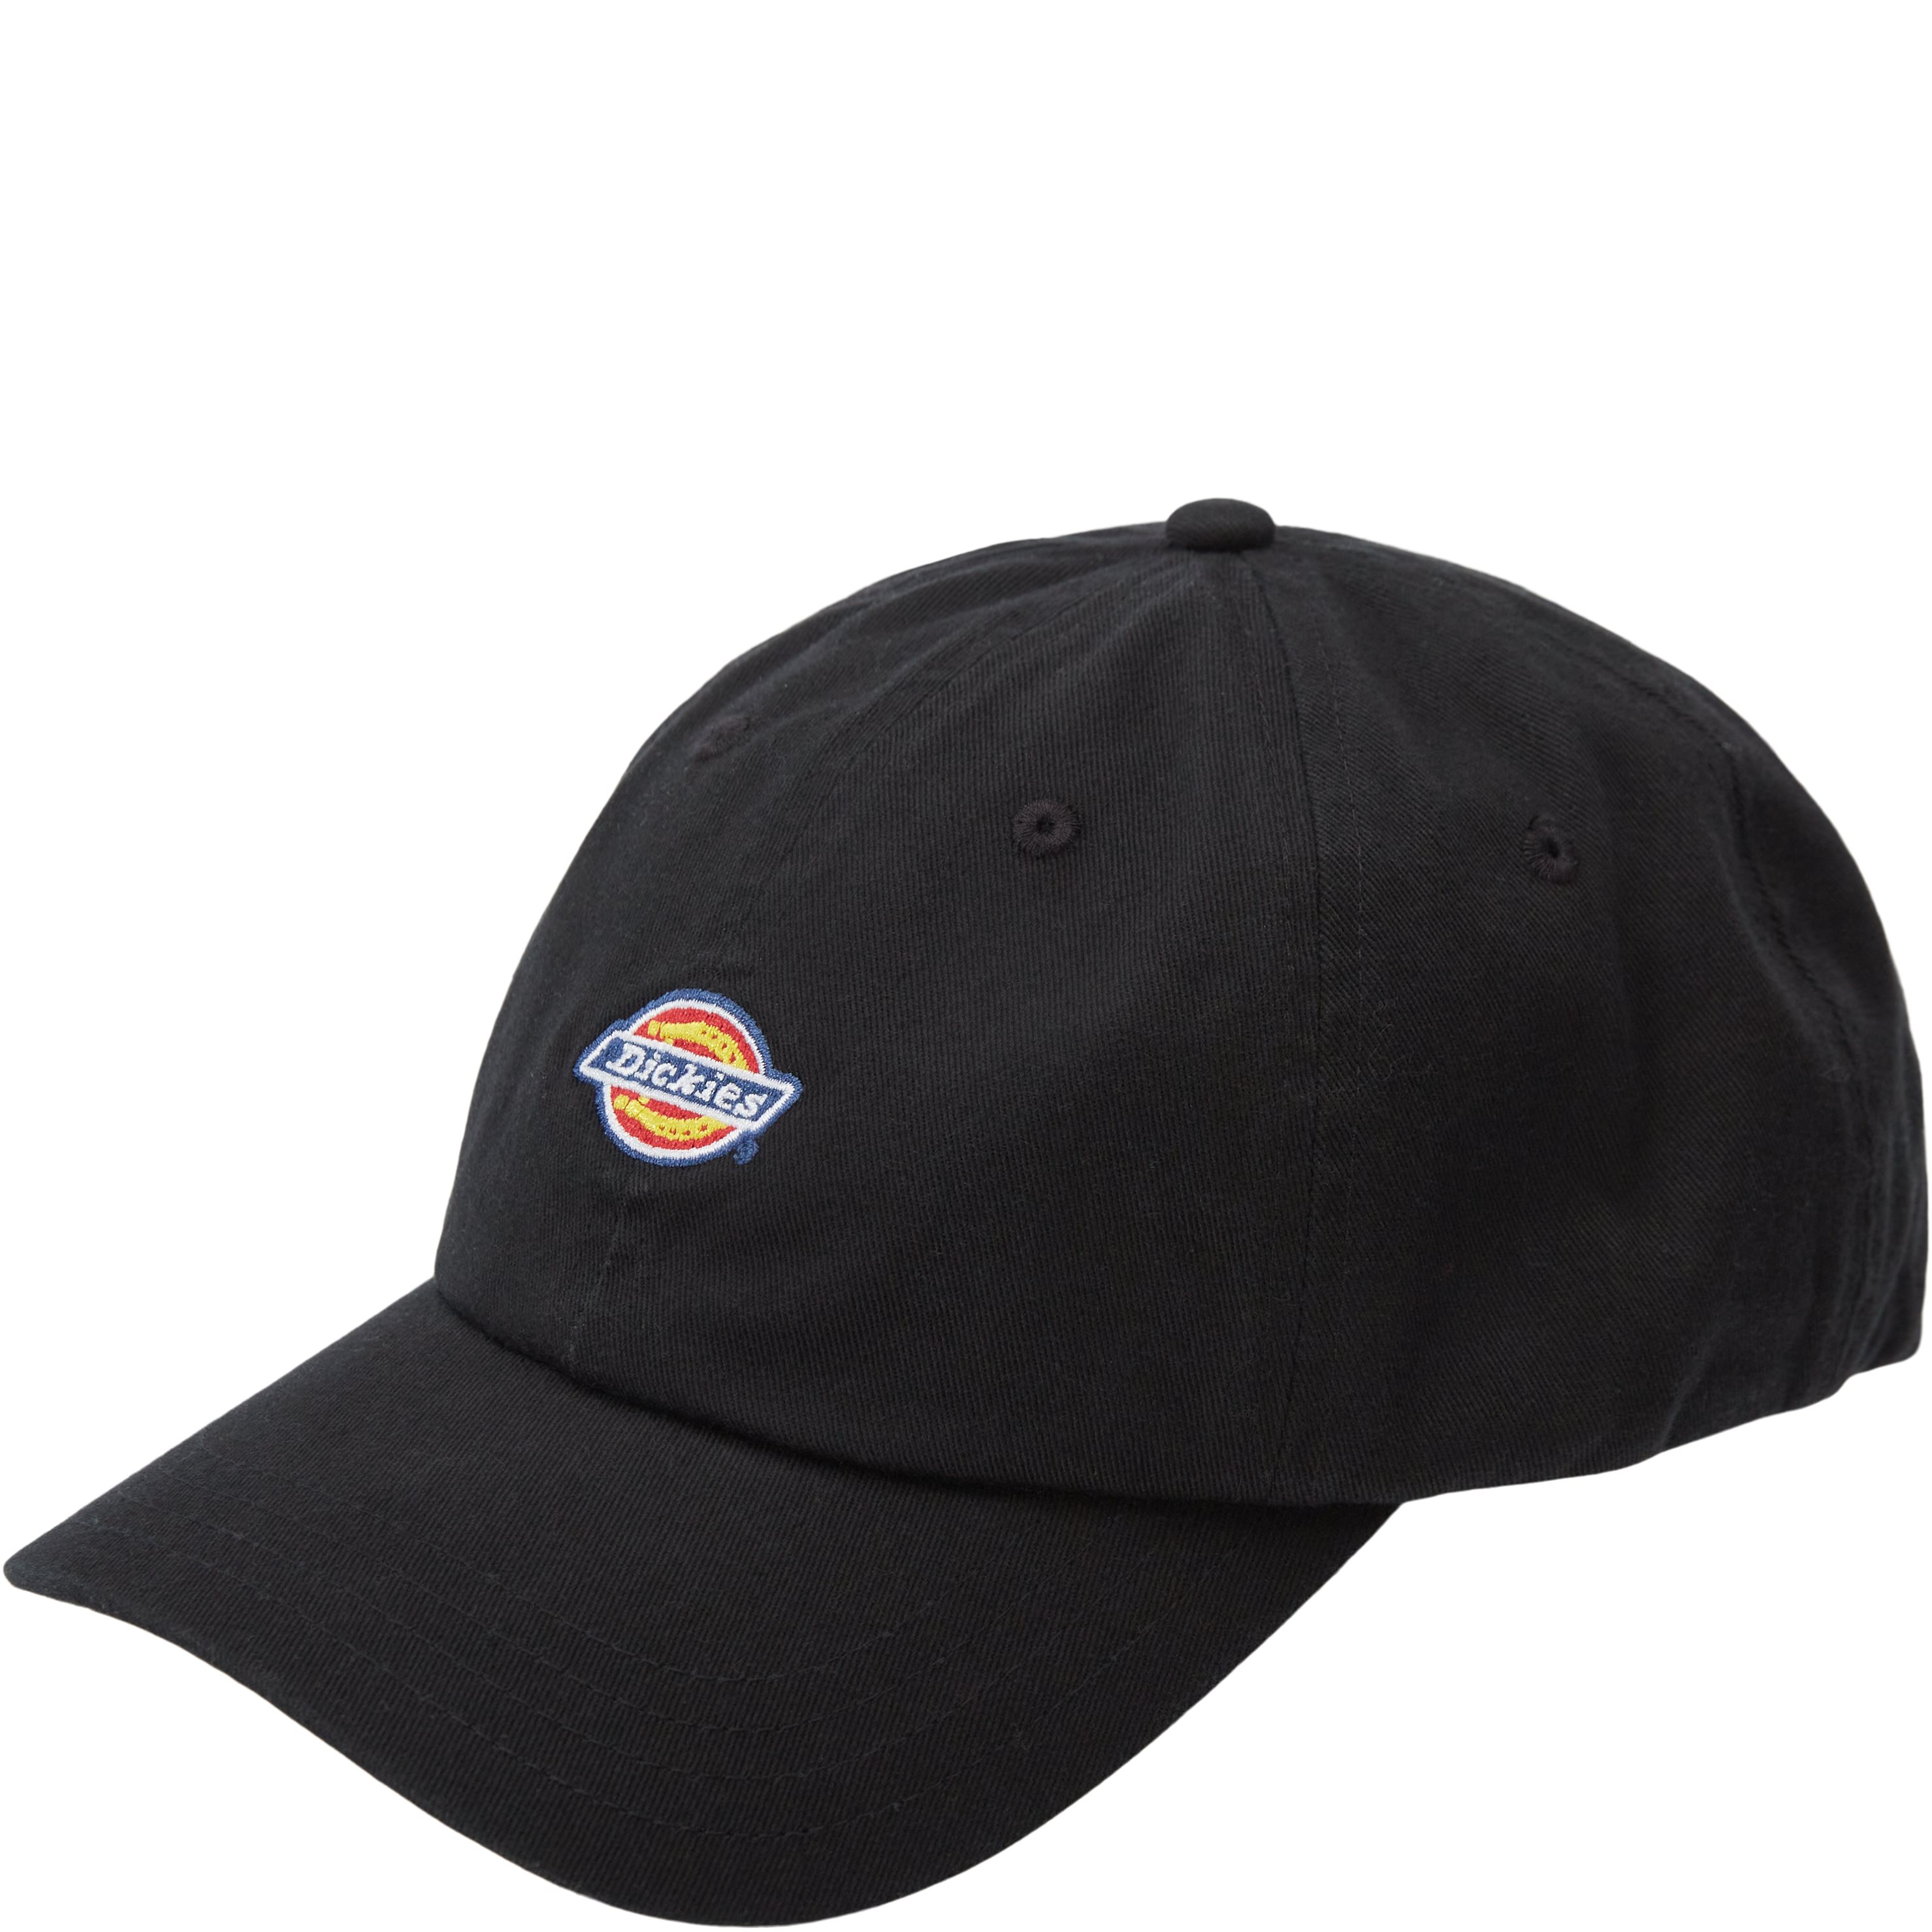 Hardwick Cap - Caps - Black